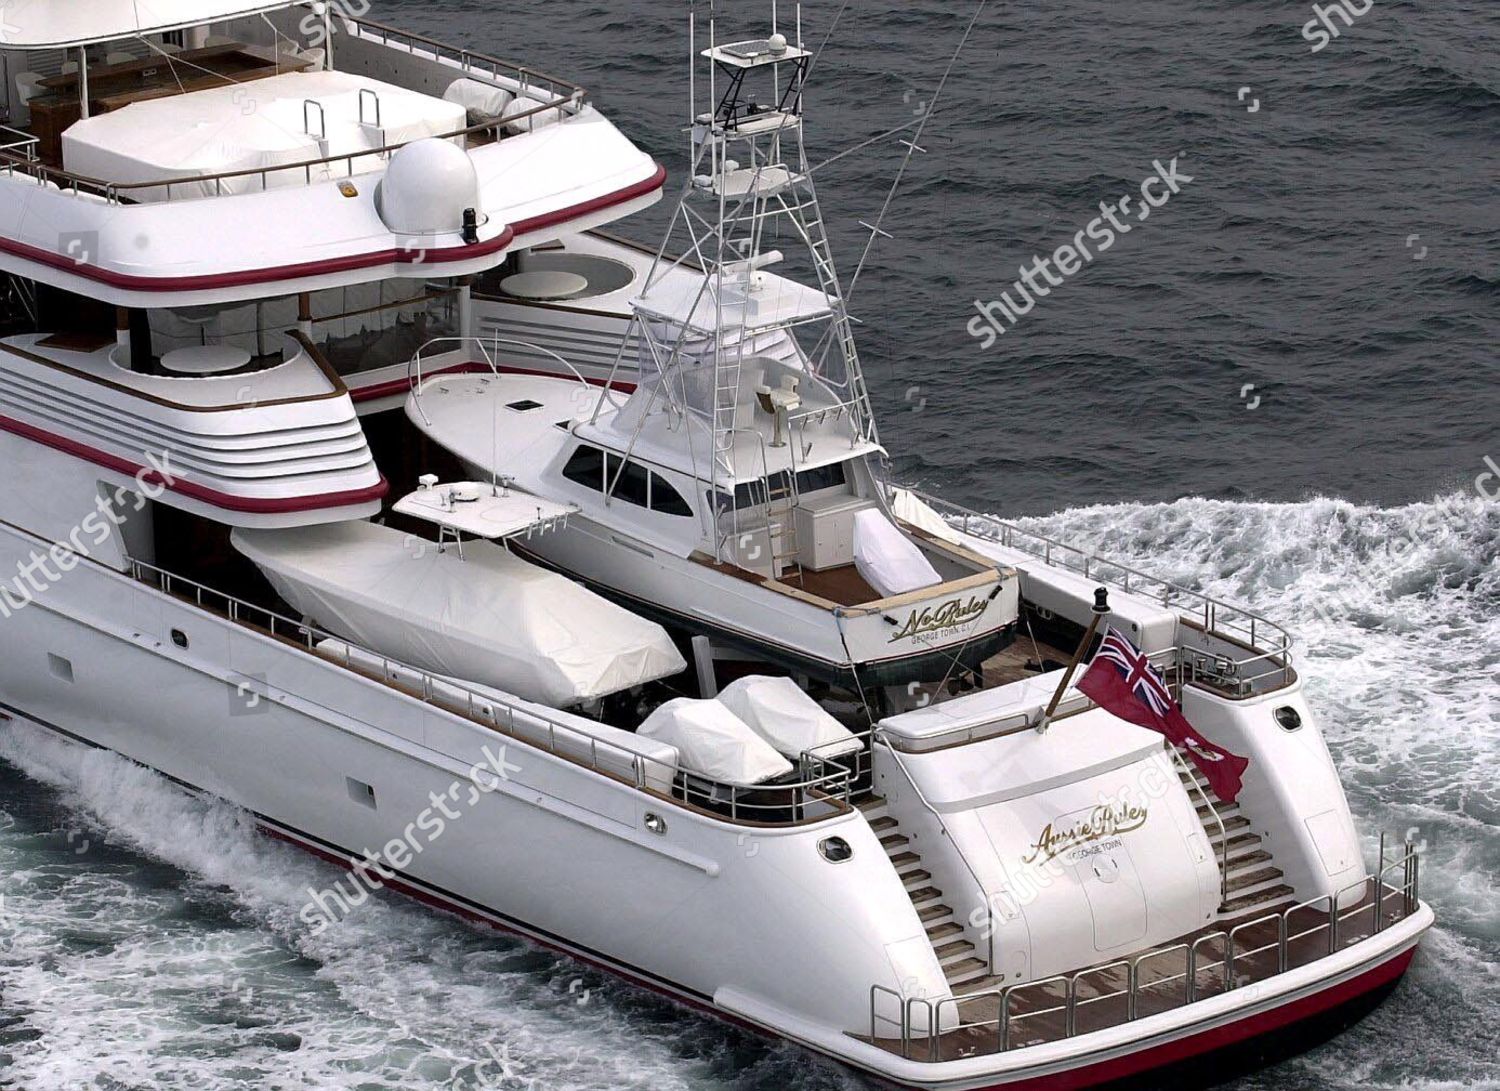 aussie rules greg norman's yacht